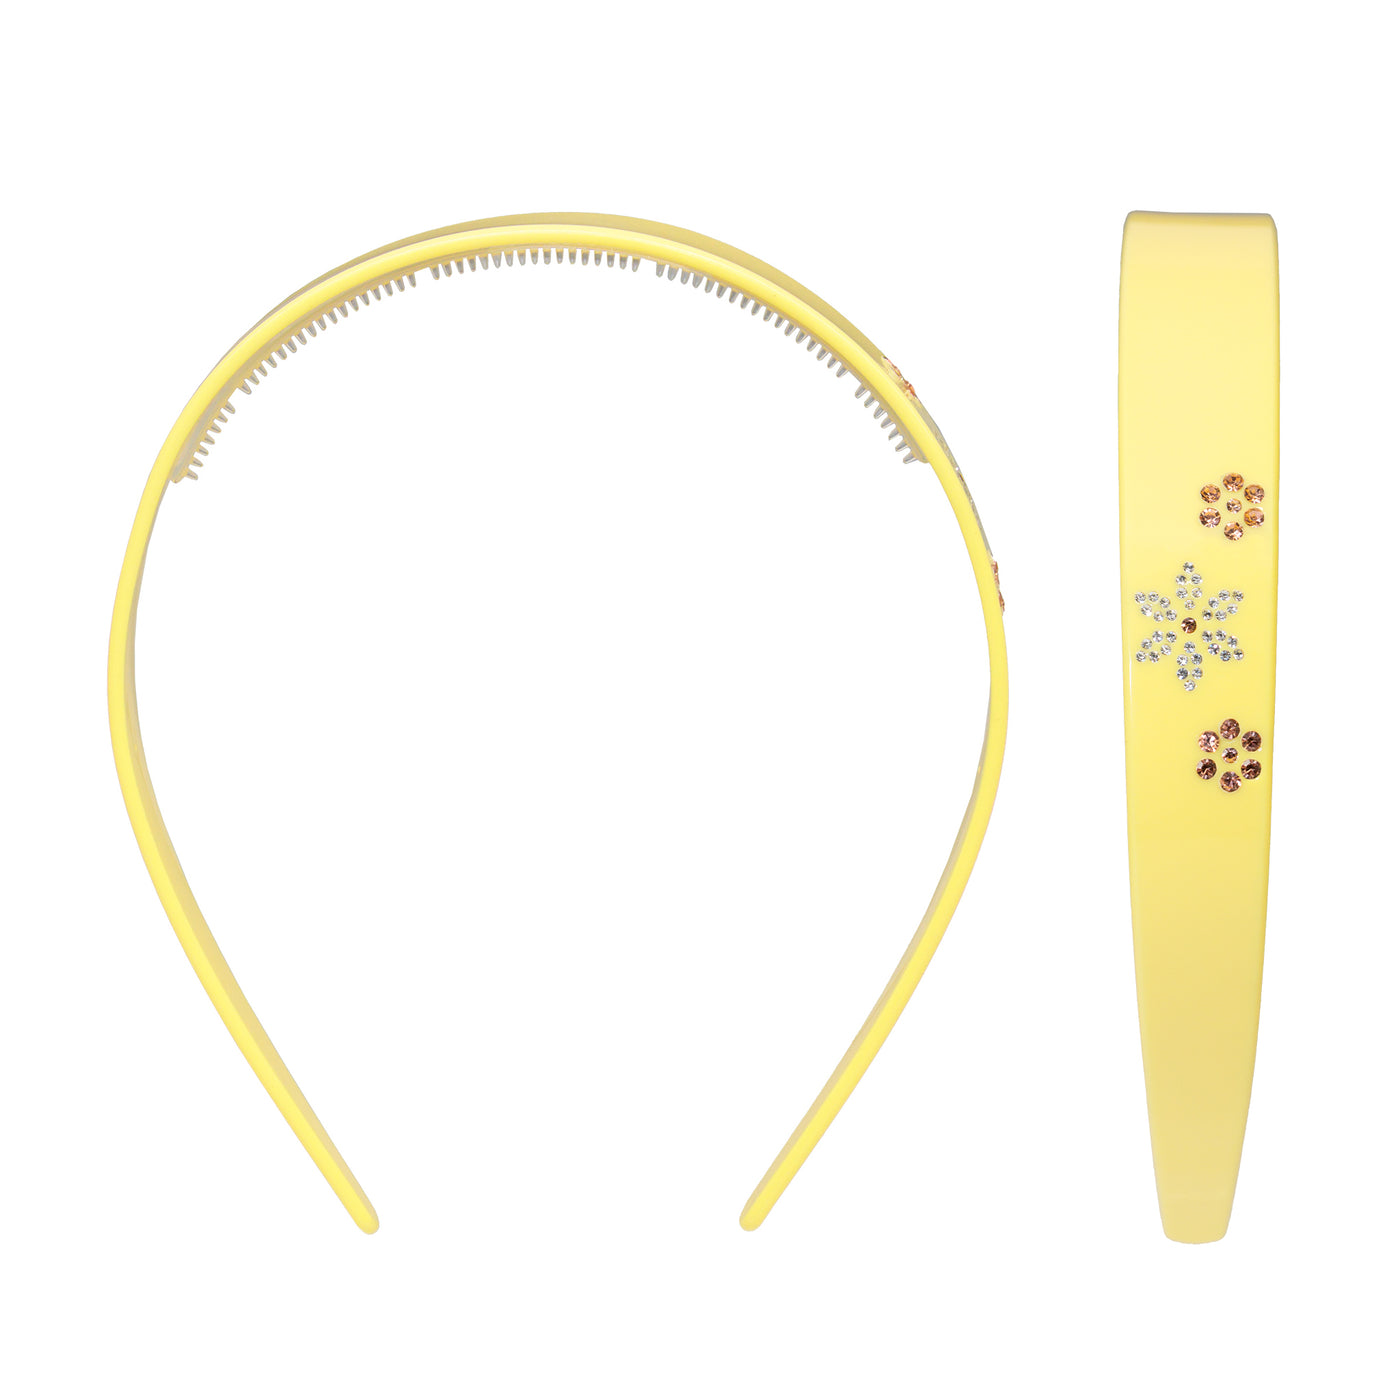 Starlet Headband in Lemon Tart front and side views